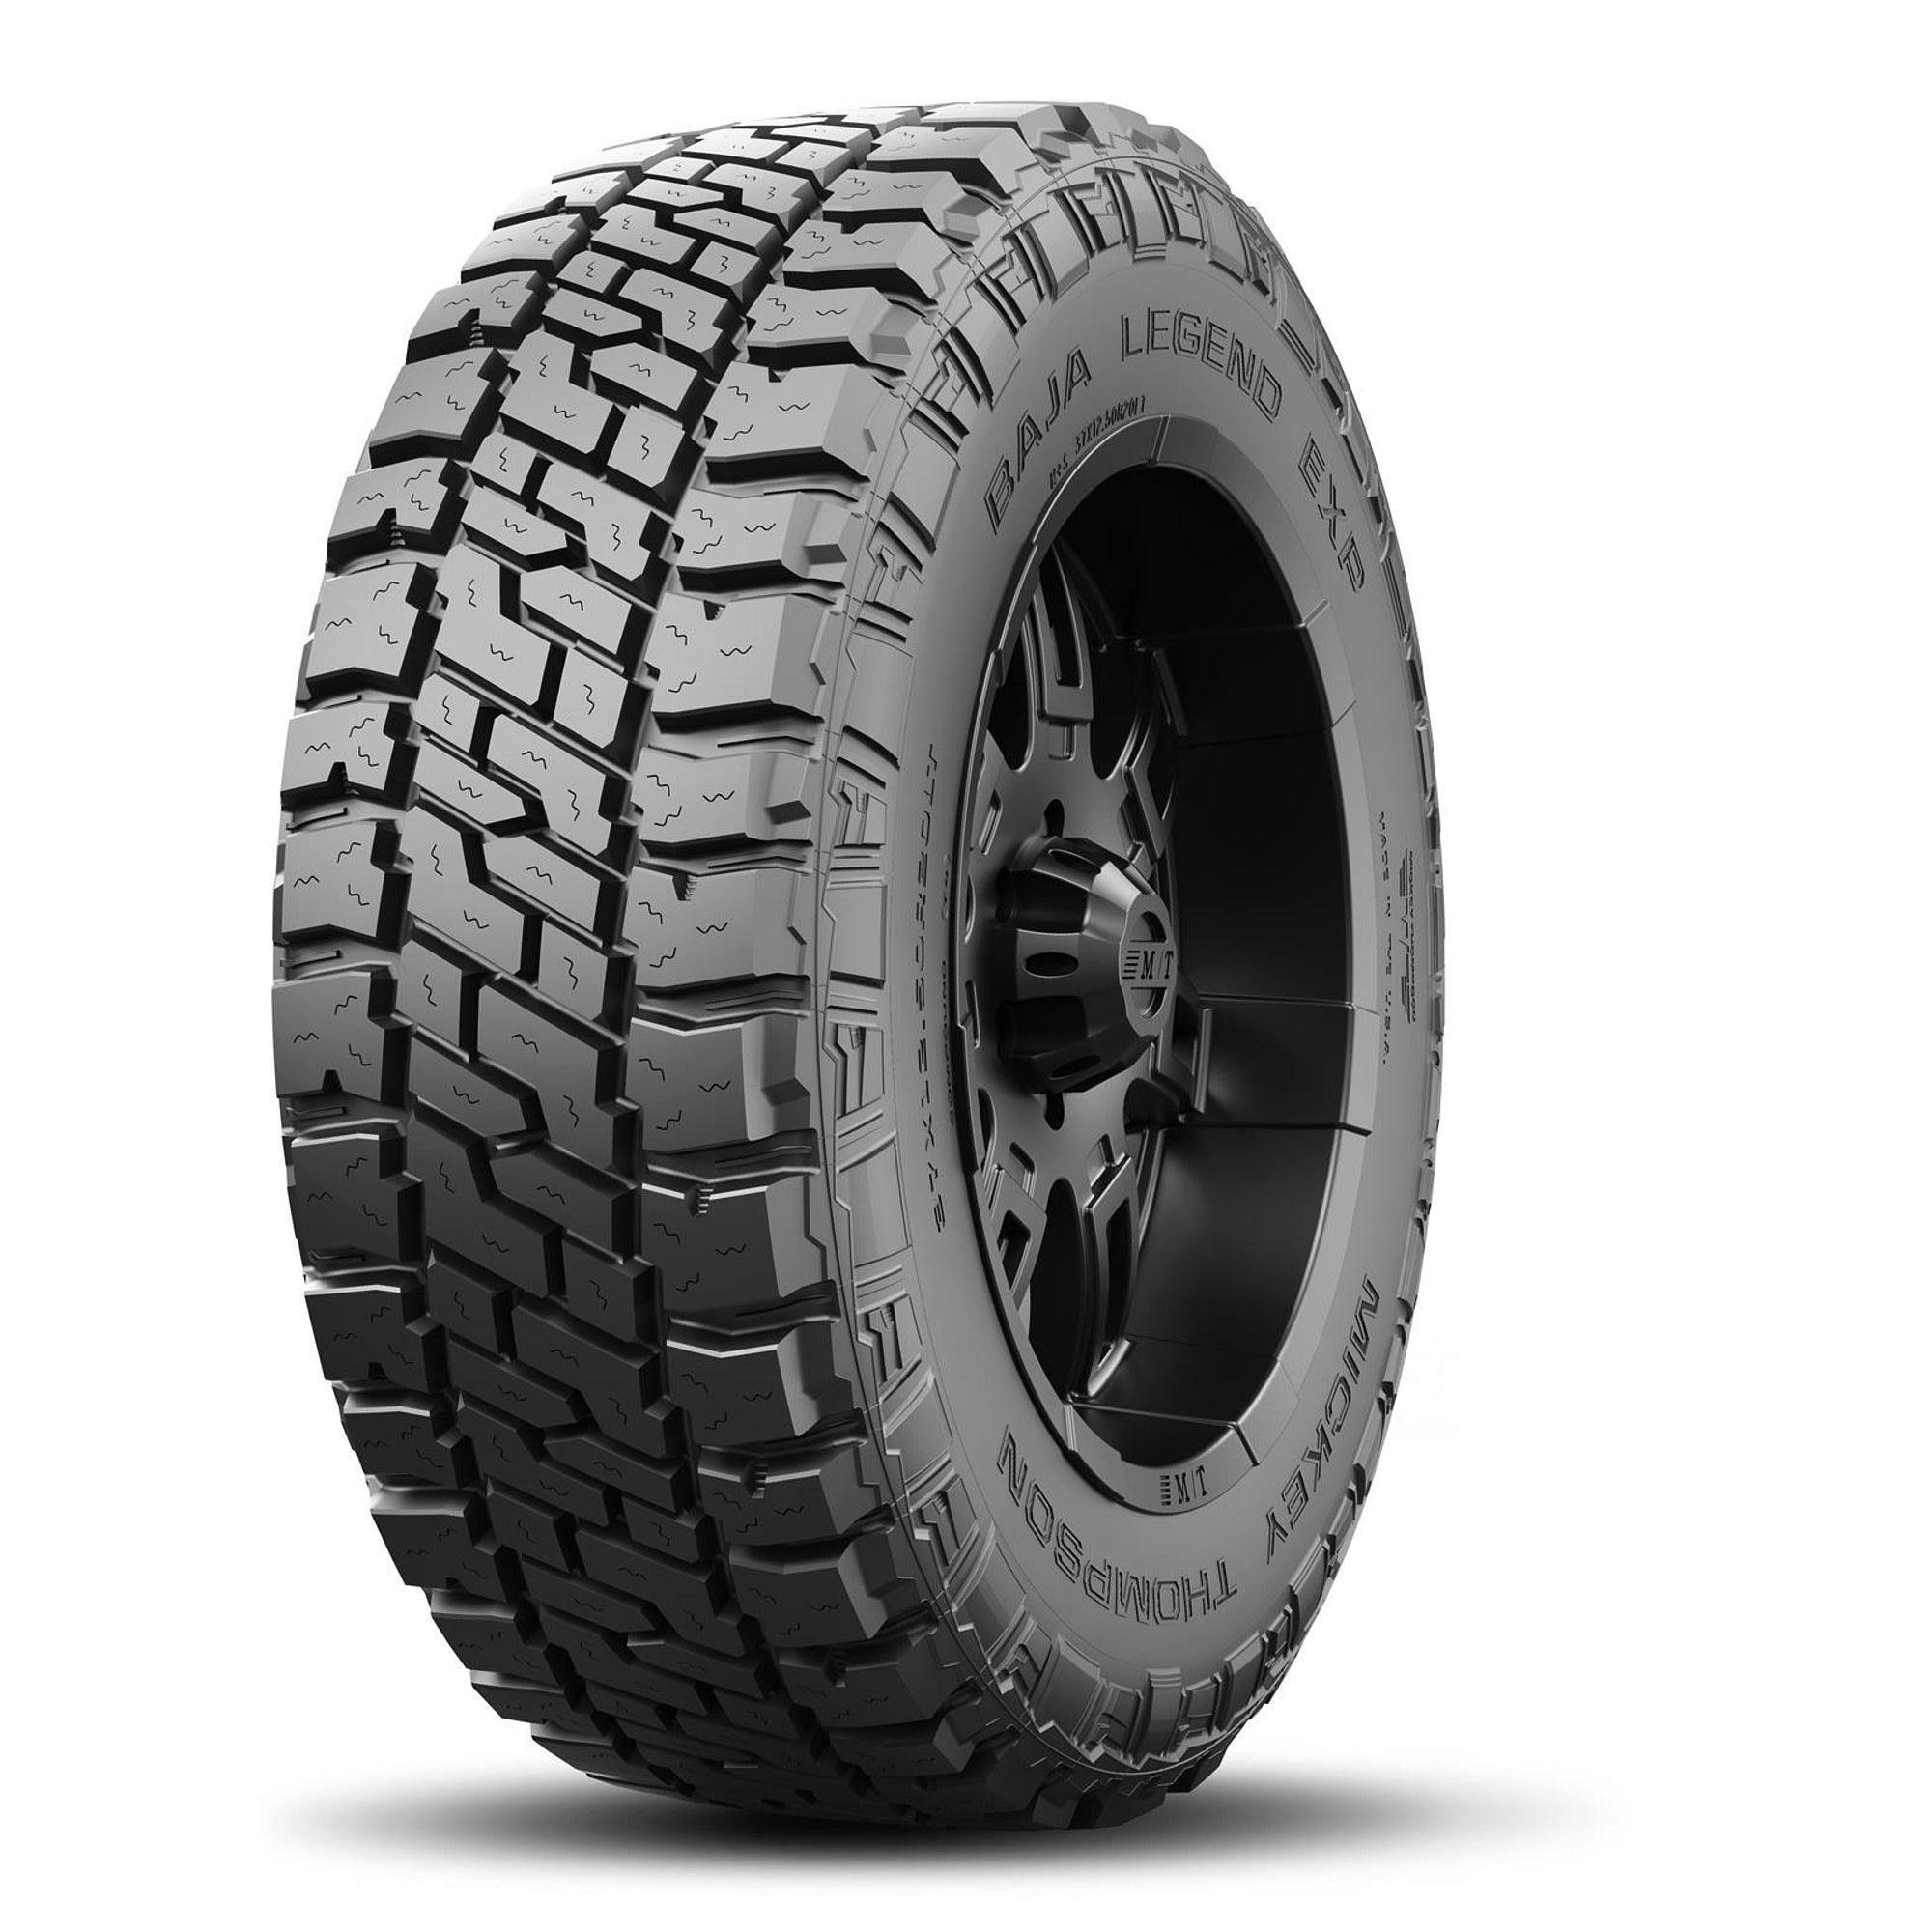 Baja Legend EXP Tire 33X12.50R20LT 114Q - Burlile Performance Products